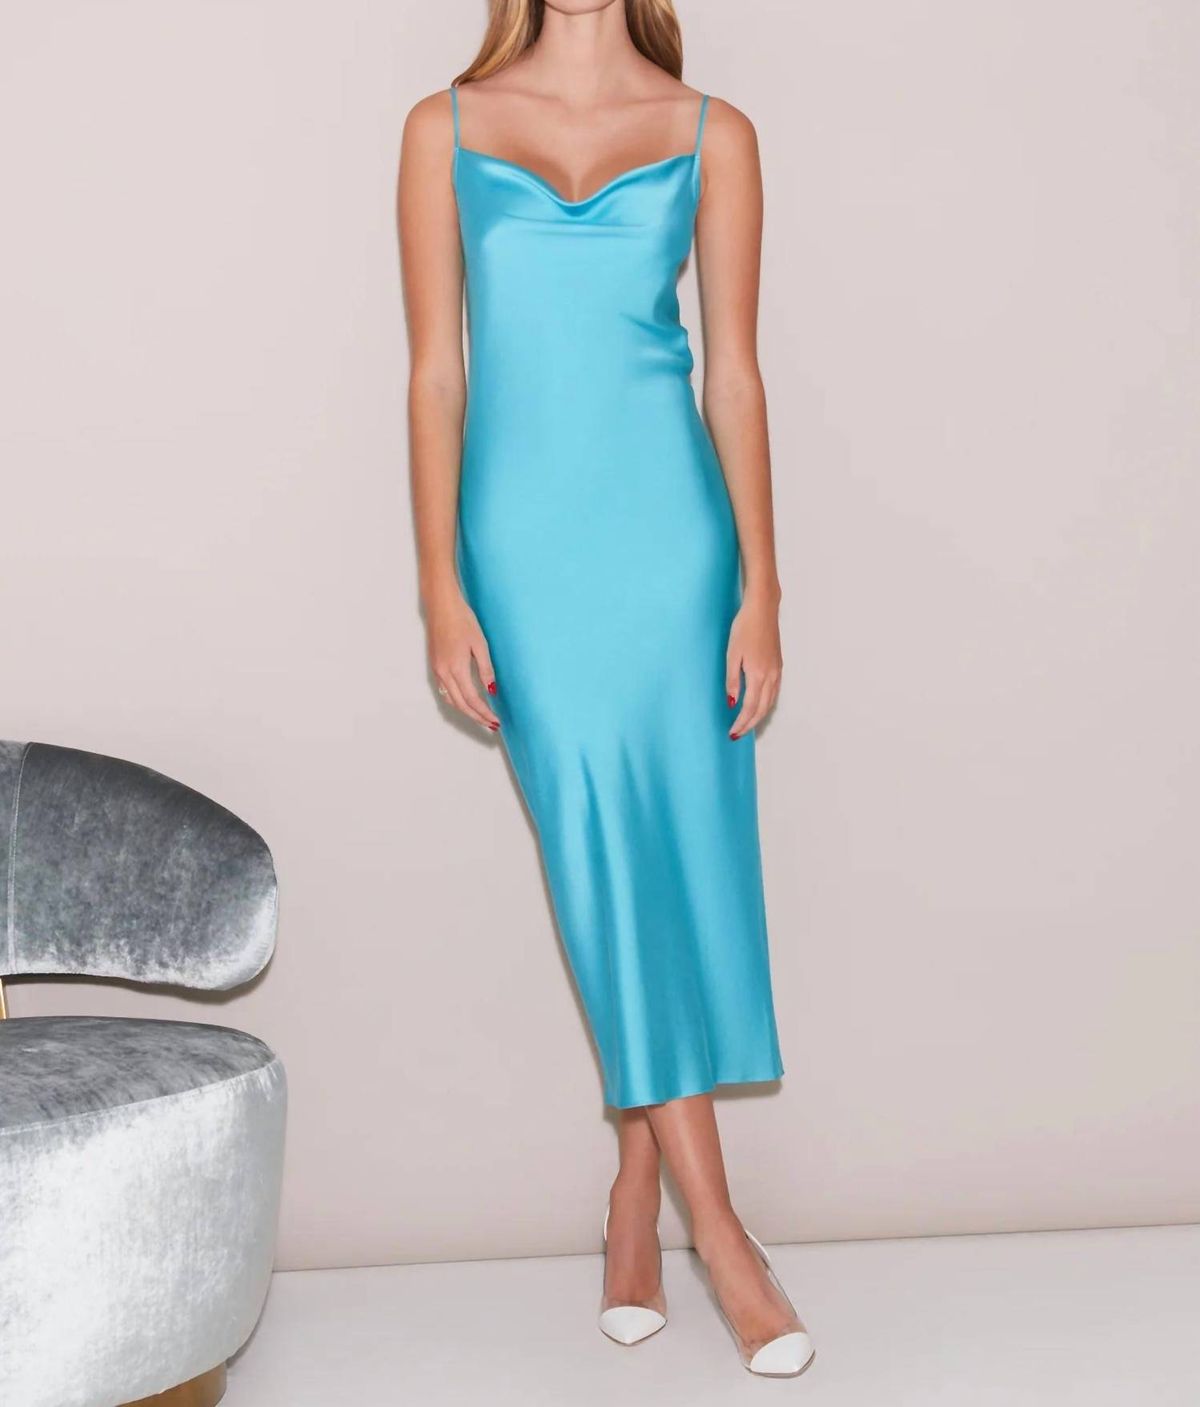 Style 1-2425539105-3236 Fleur Du Mal Size S Satin Blue Cocktail Dress on Queenly